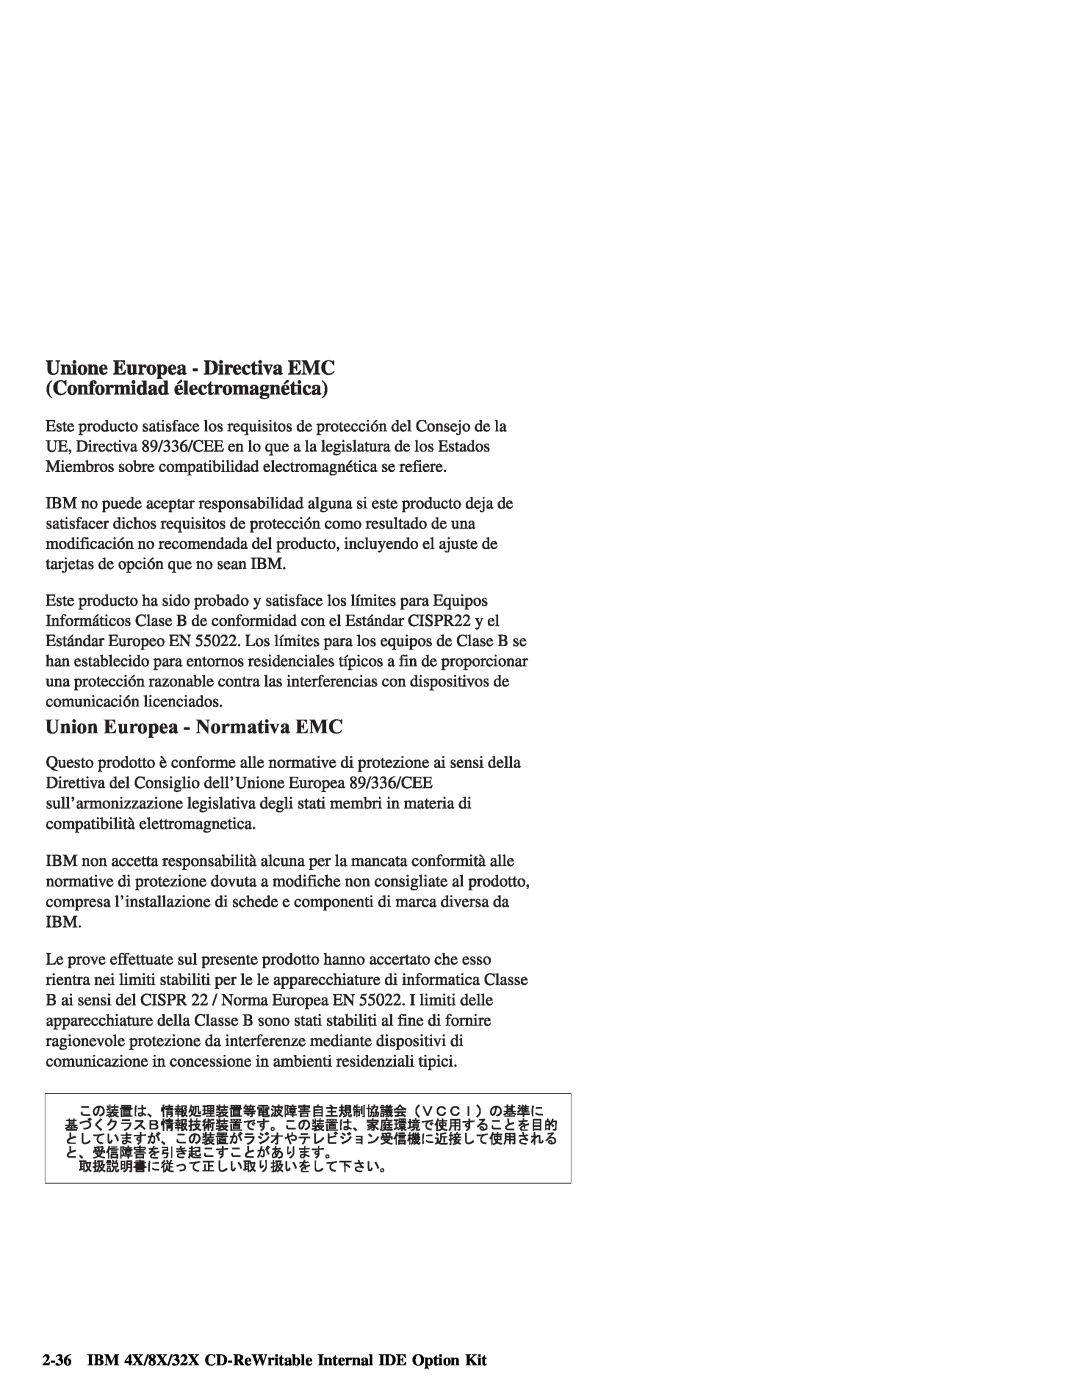 IBM 09N4076 manual Union Europea - Normativa EMC, IBM 4X/8X/32X CD-ReWritable Internal IDE Option Kit 